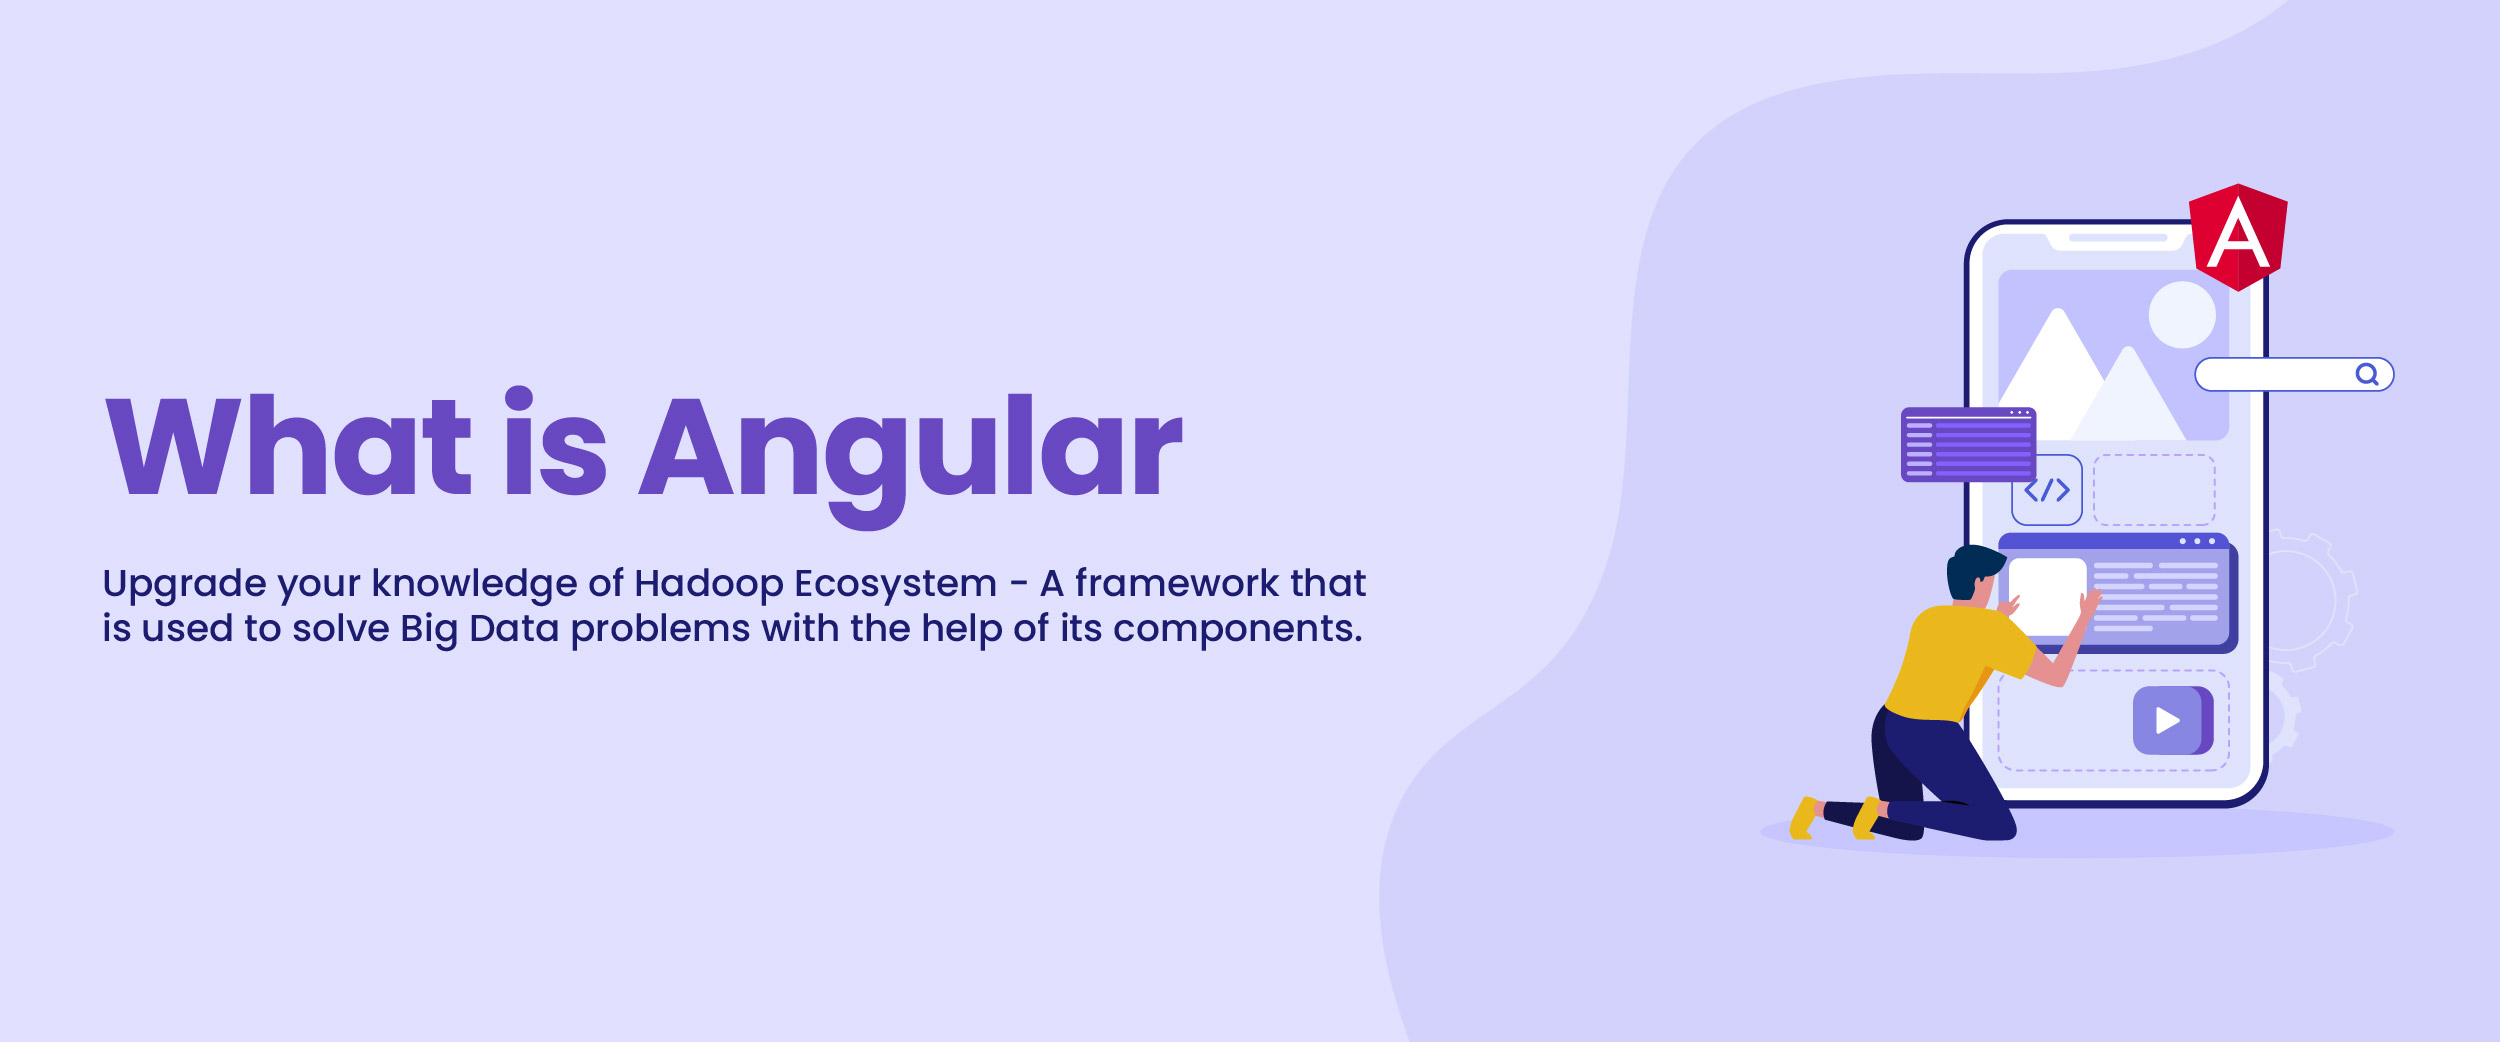 what is angular